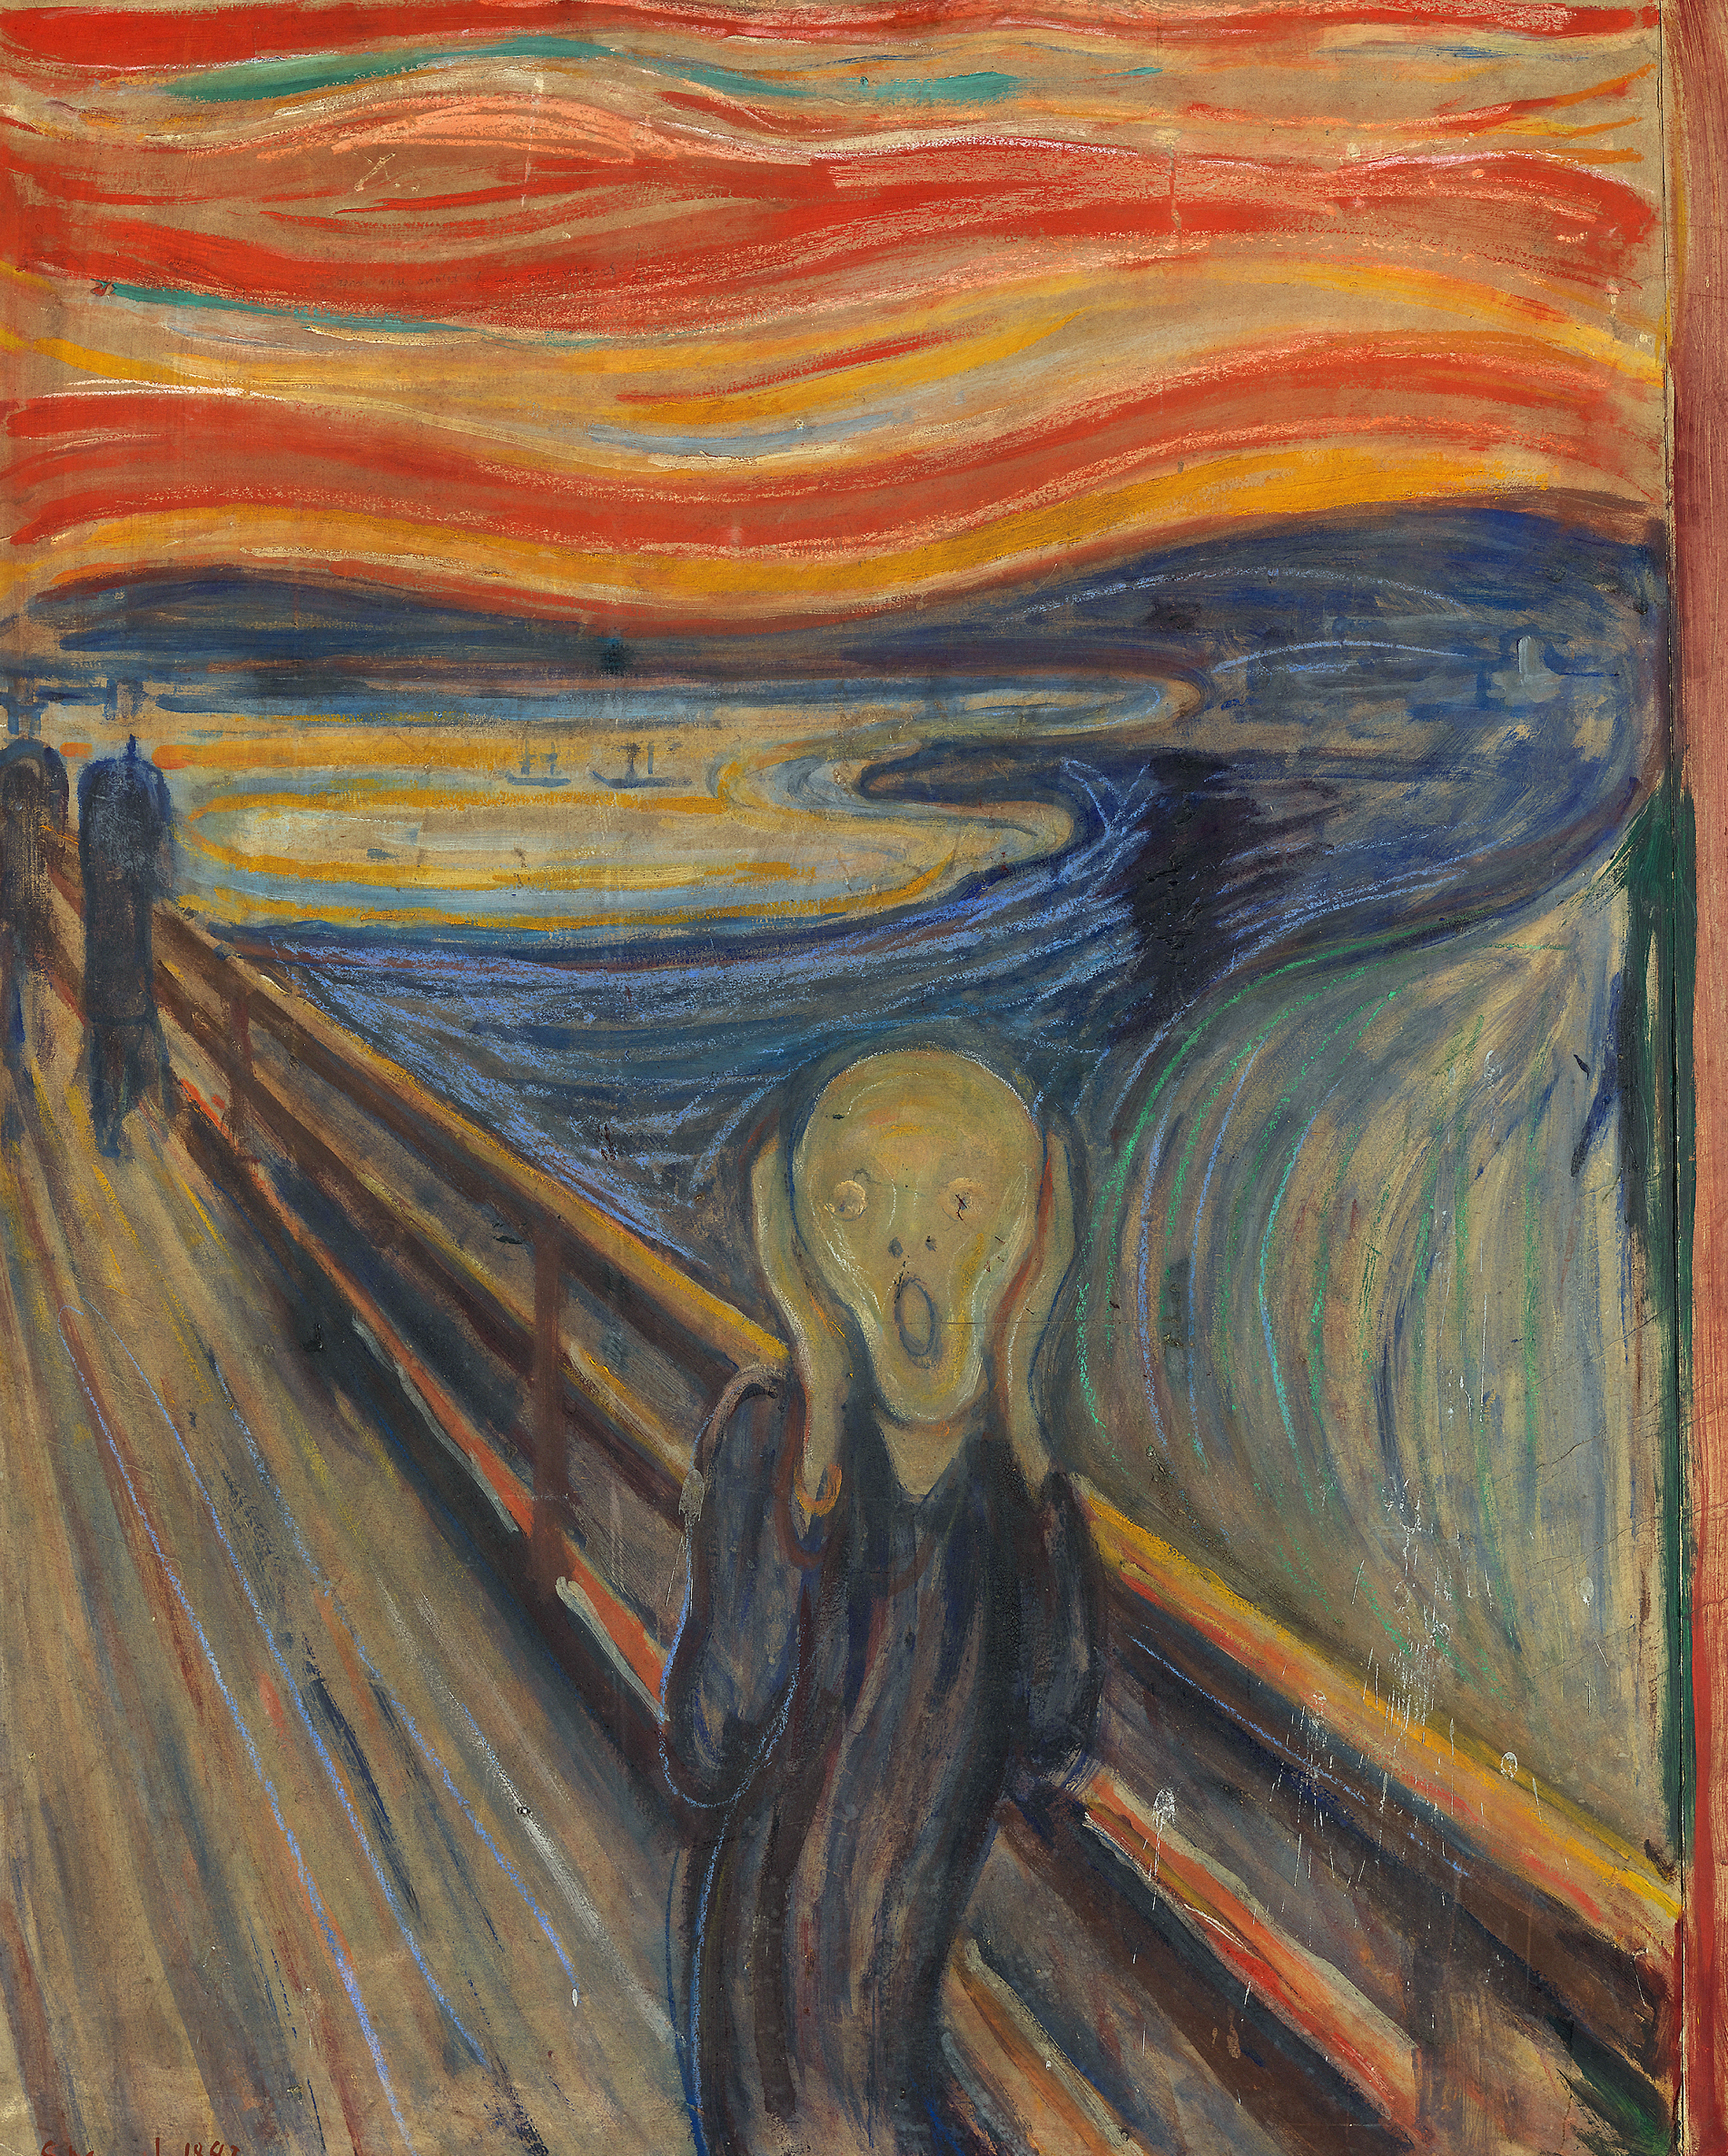 Edvard Munch's The Scream